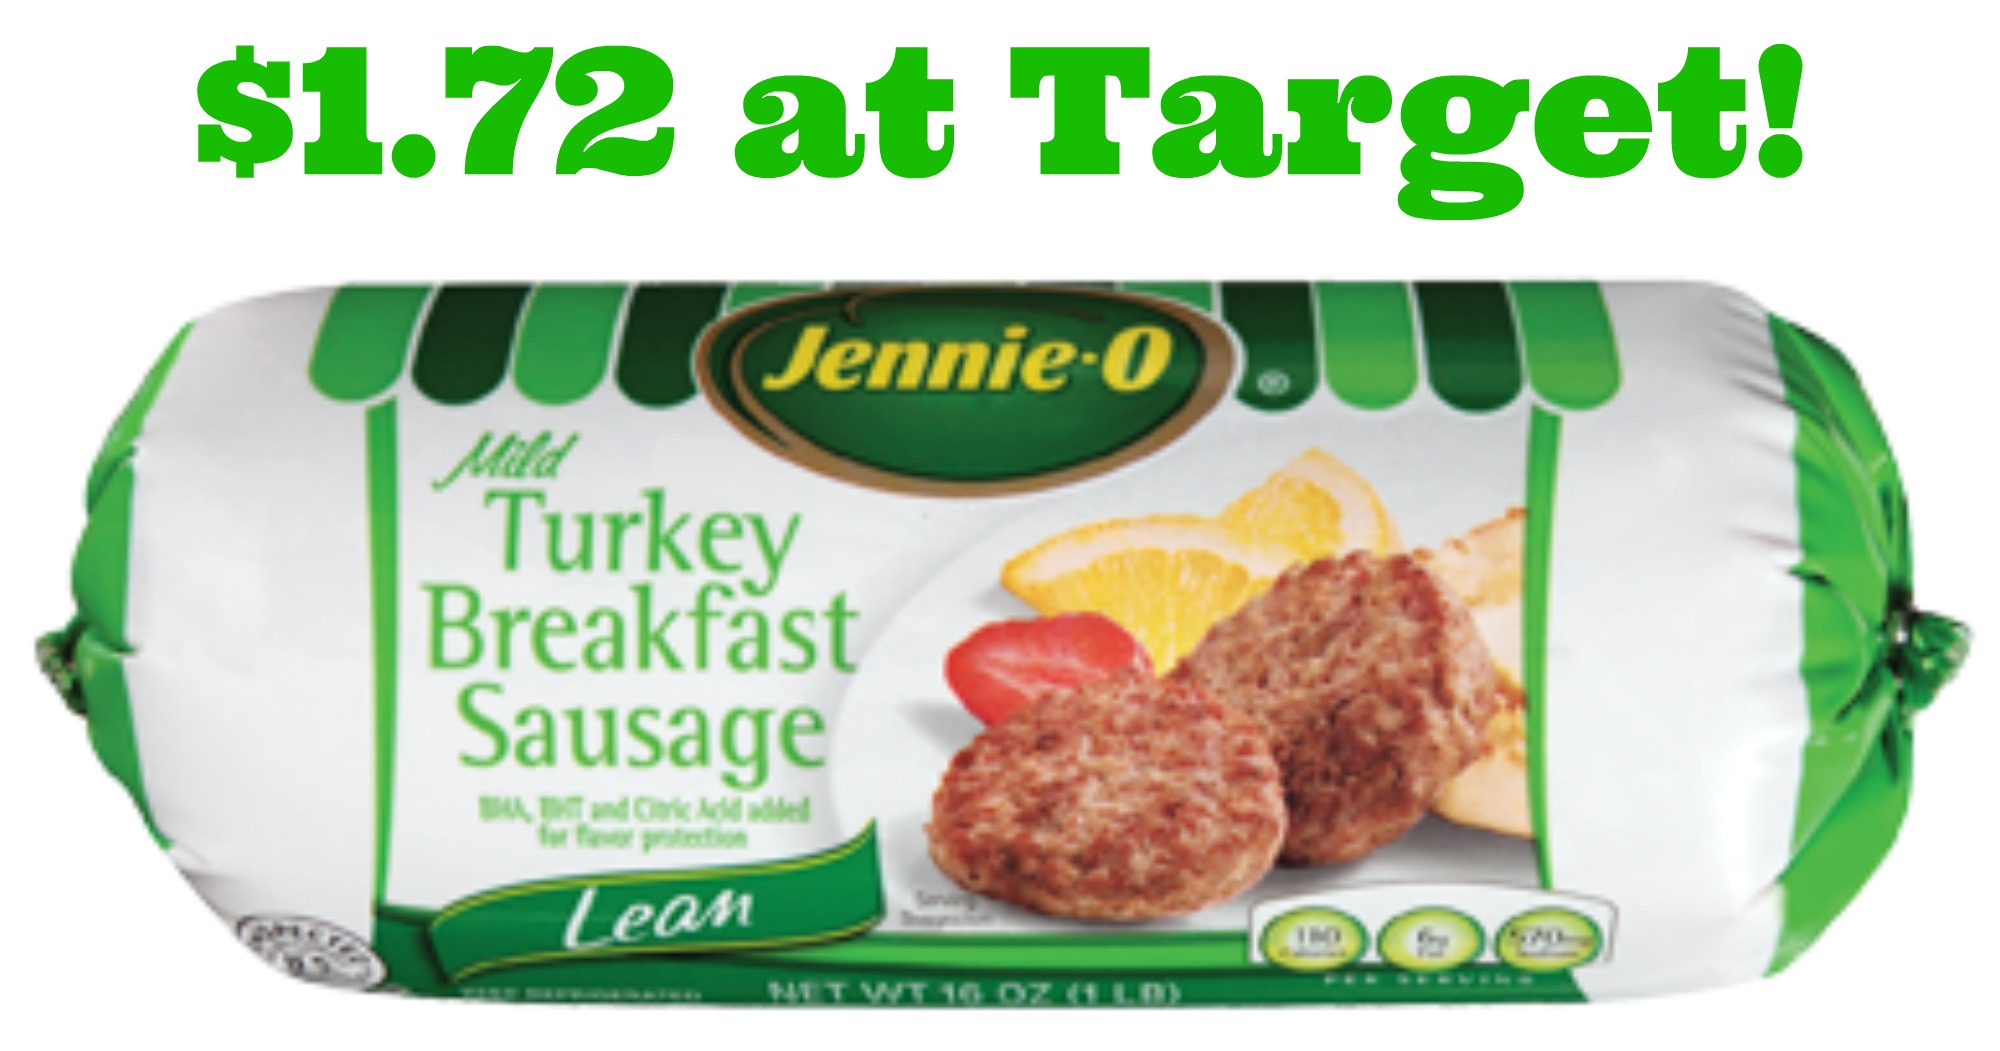 jennie-o turkey breakfast sausage target